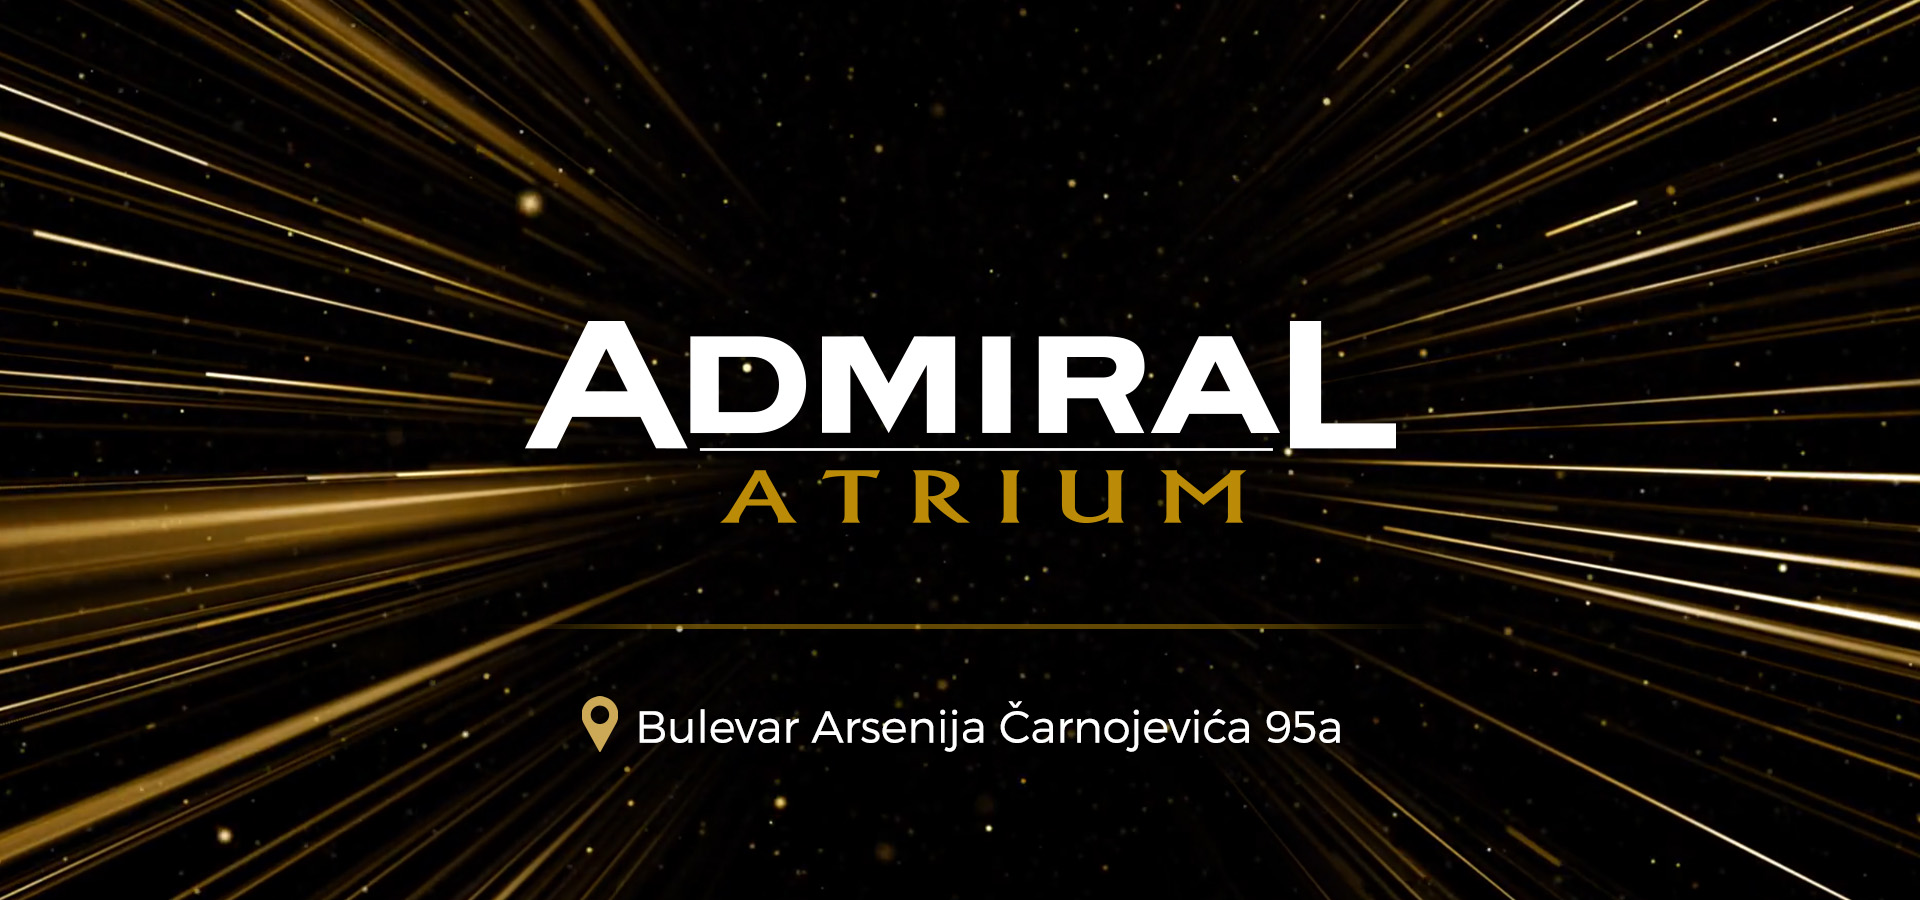 Admiral Club at Bulevar Arsenija Čarnojevića 95a has become Admiral ATRIUM!